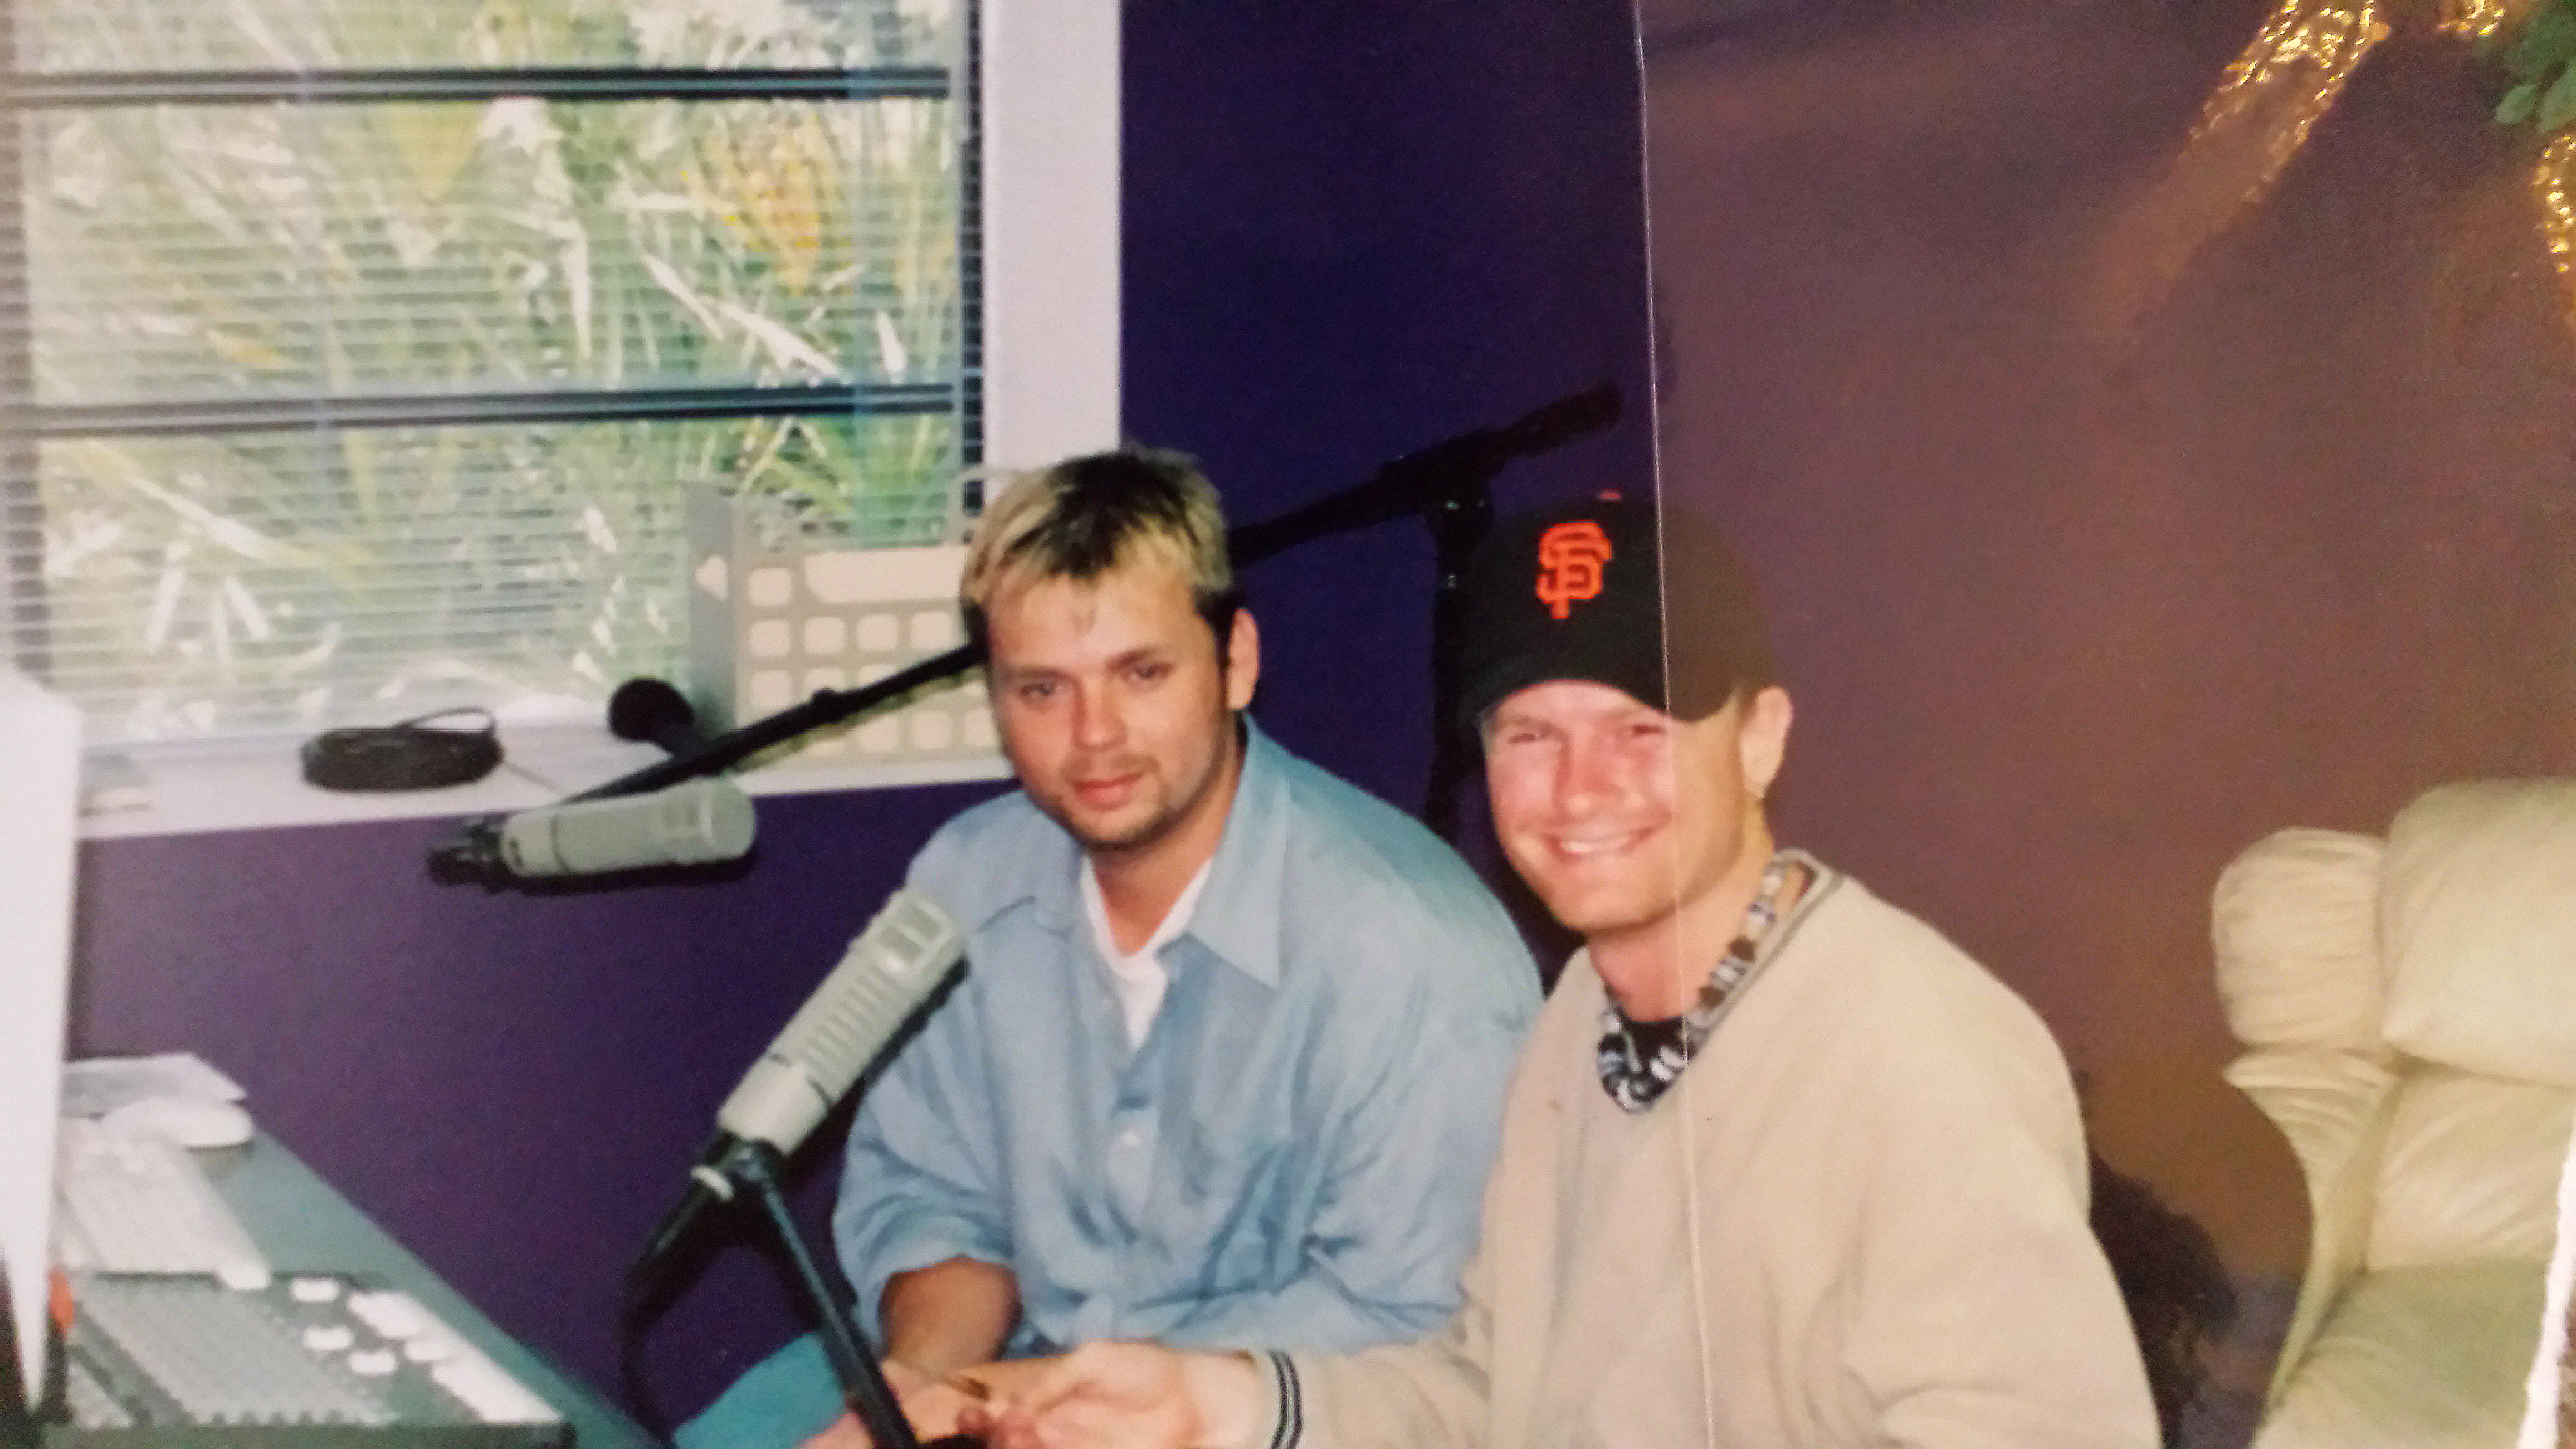 Jonathan Hay in Daytona Beach radio interview in 2000.